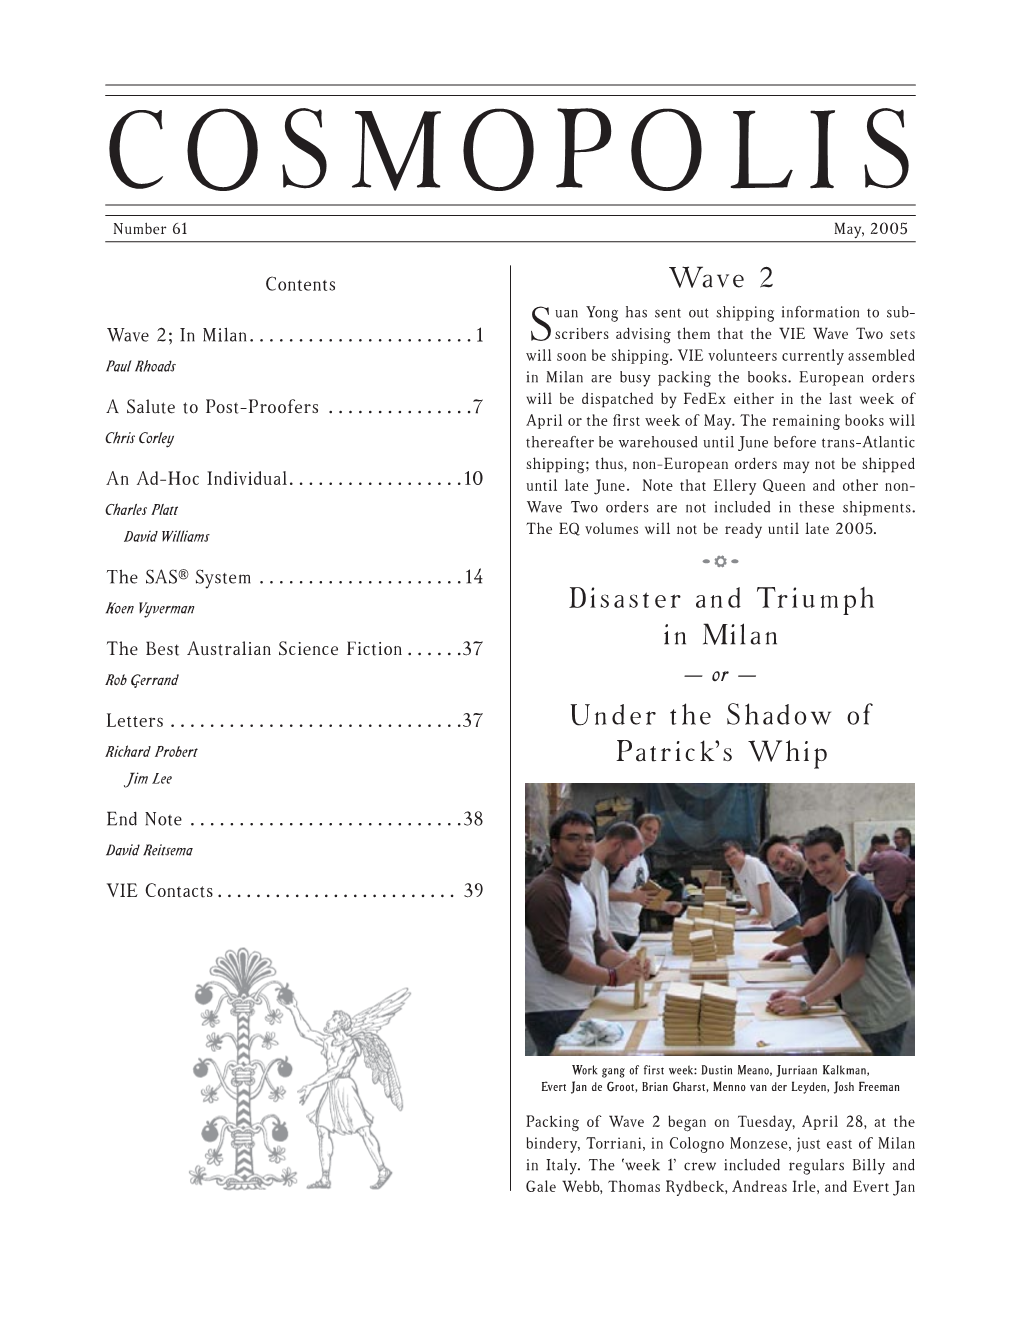 Cosmopolis#61